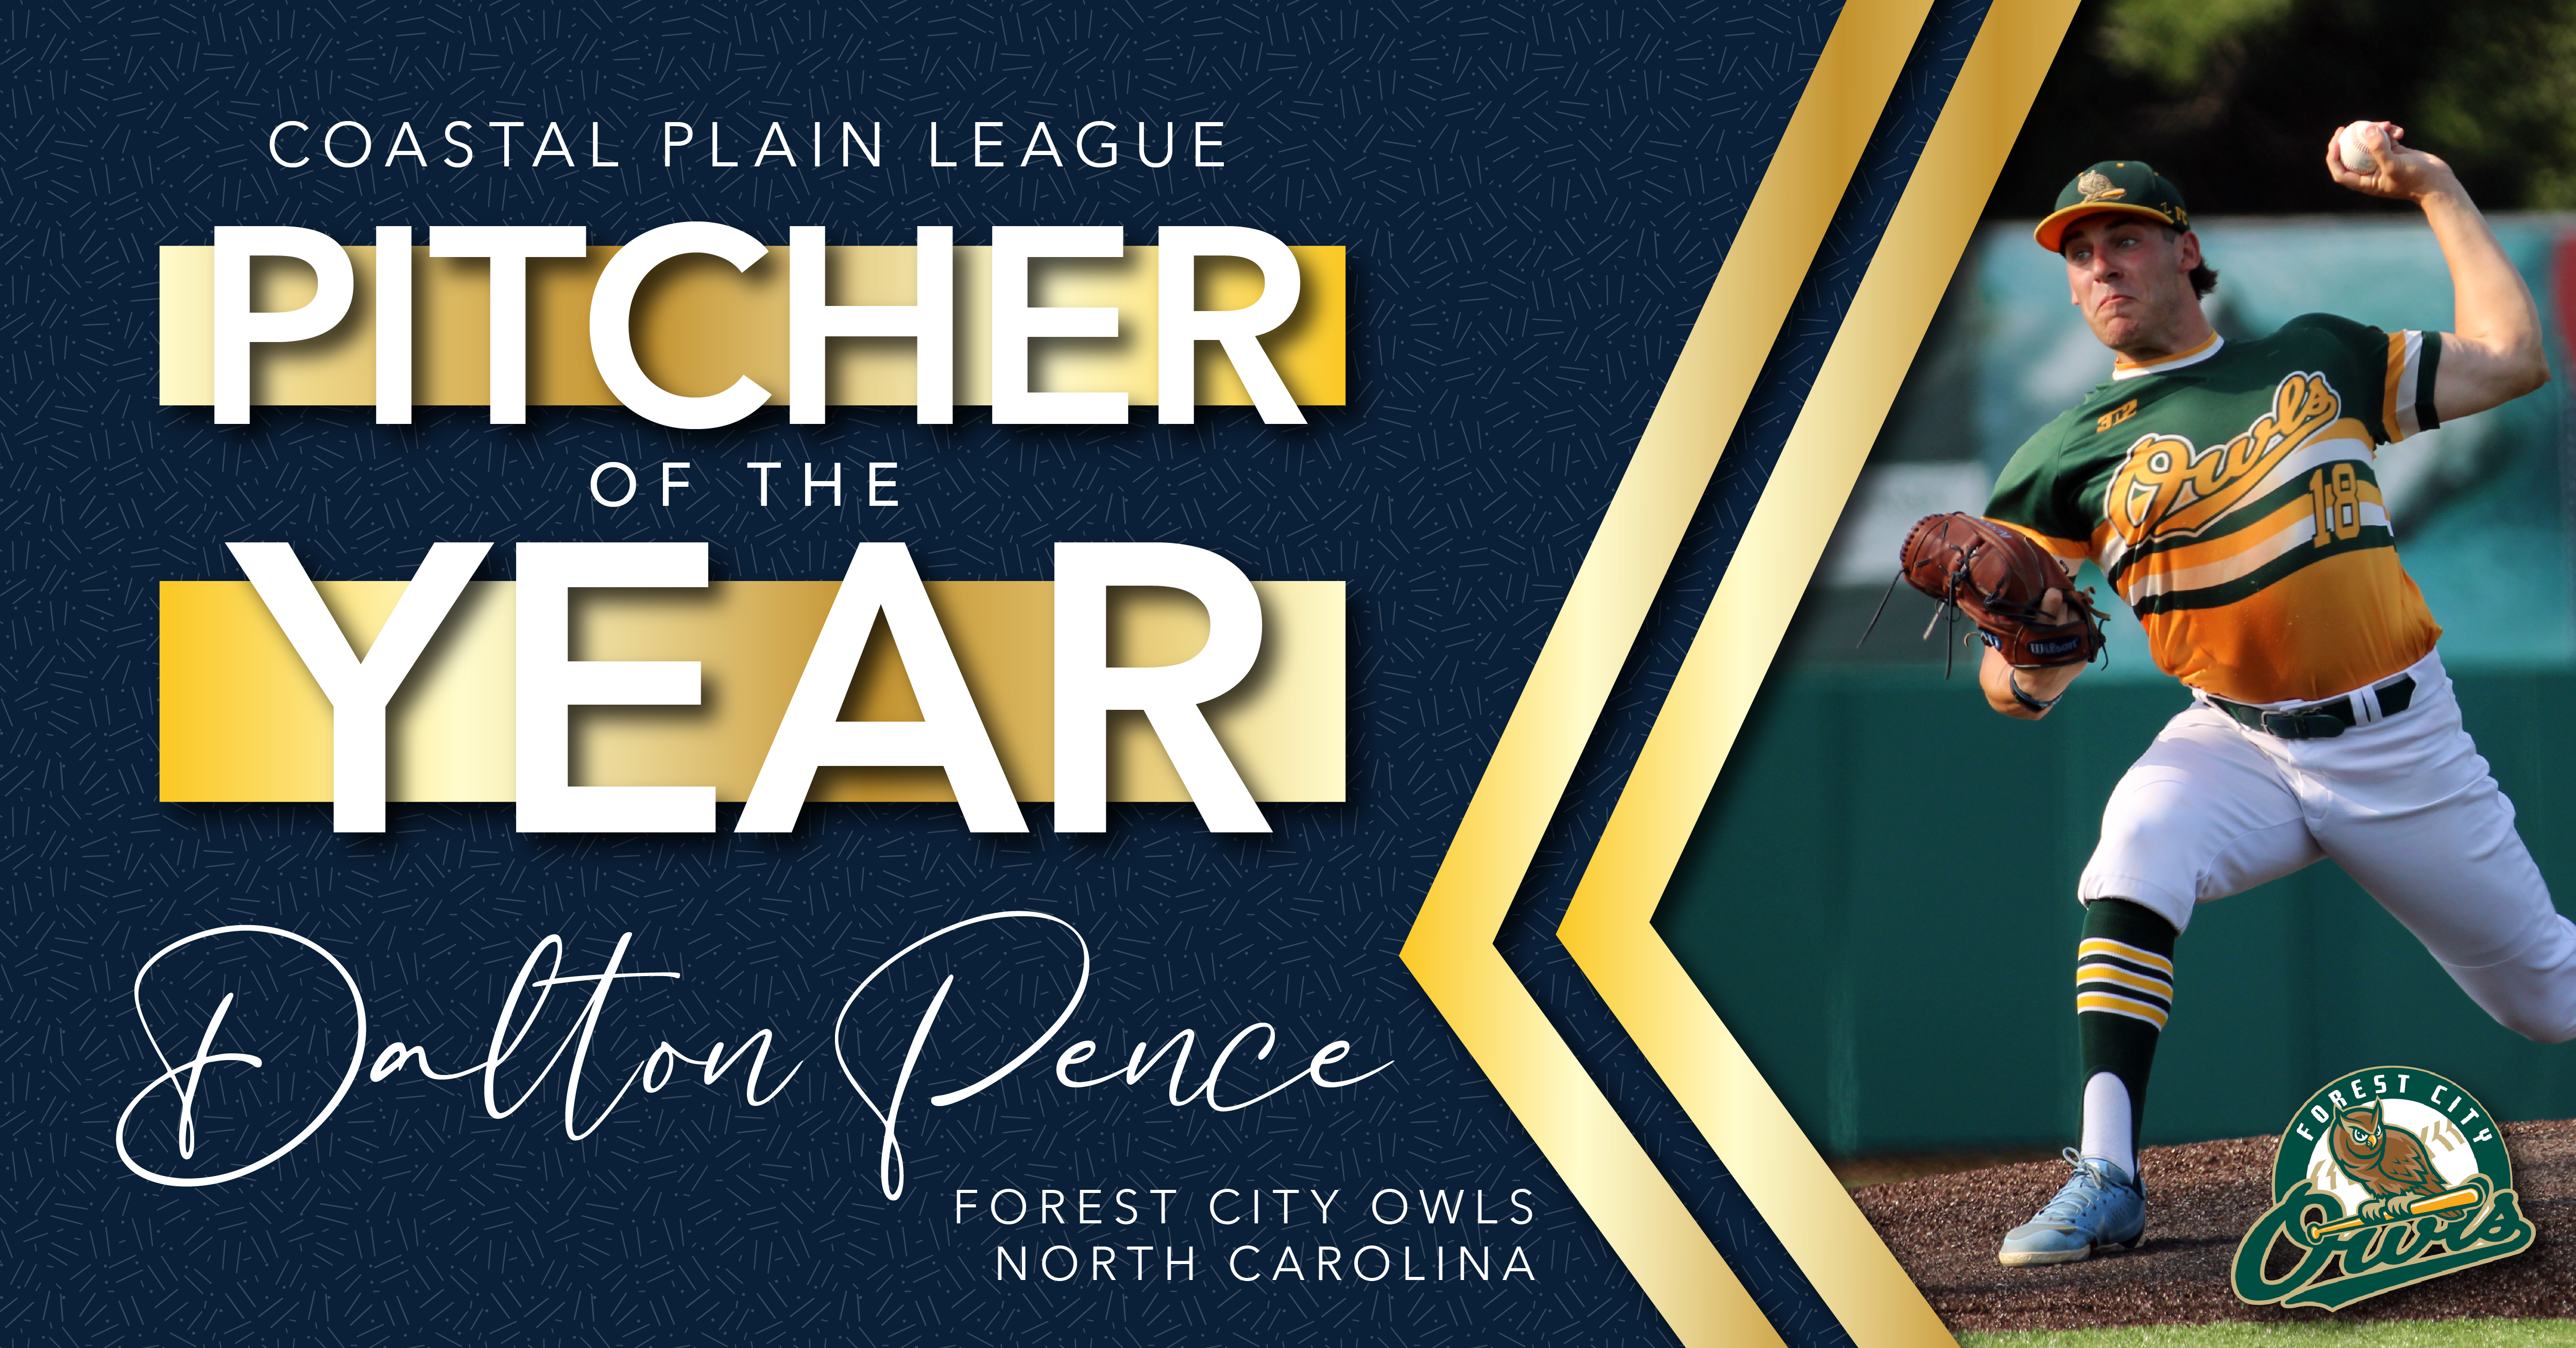 Dalton Pence Named 2022 Coastal Plain League Pitcher of the Year